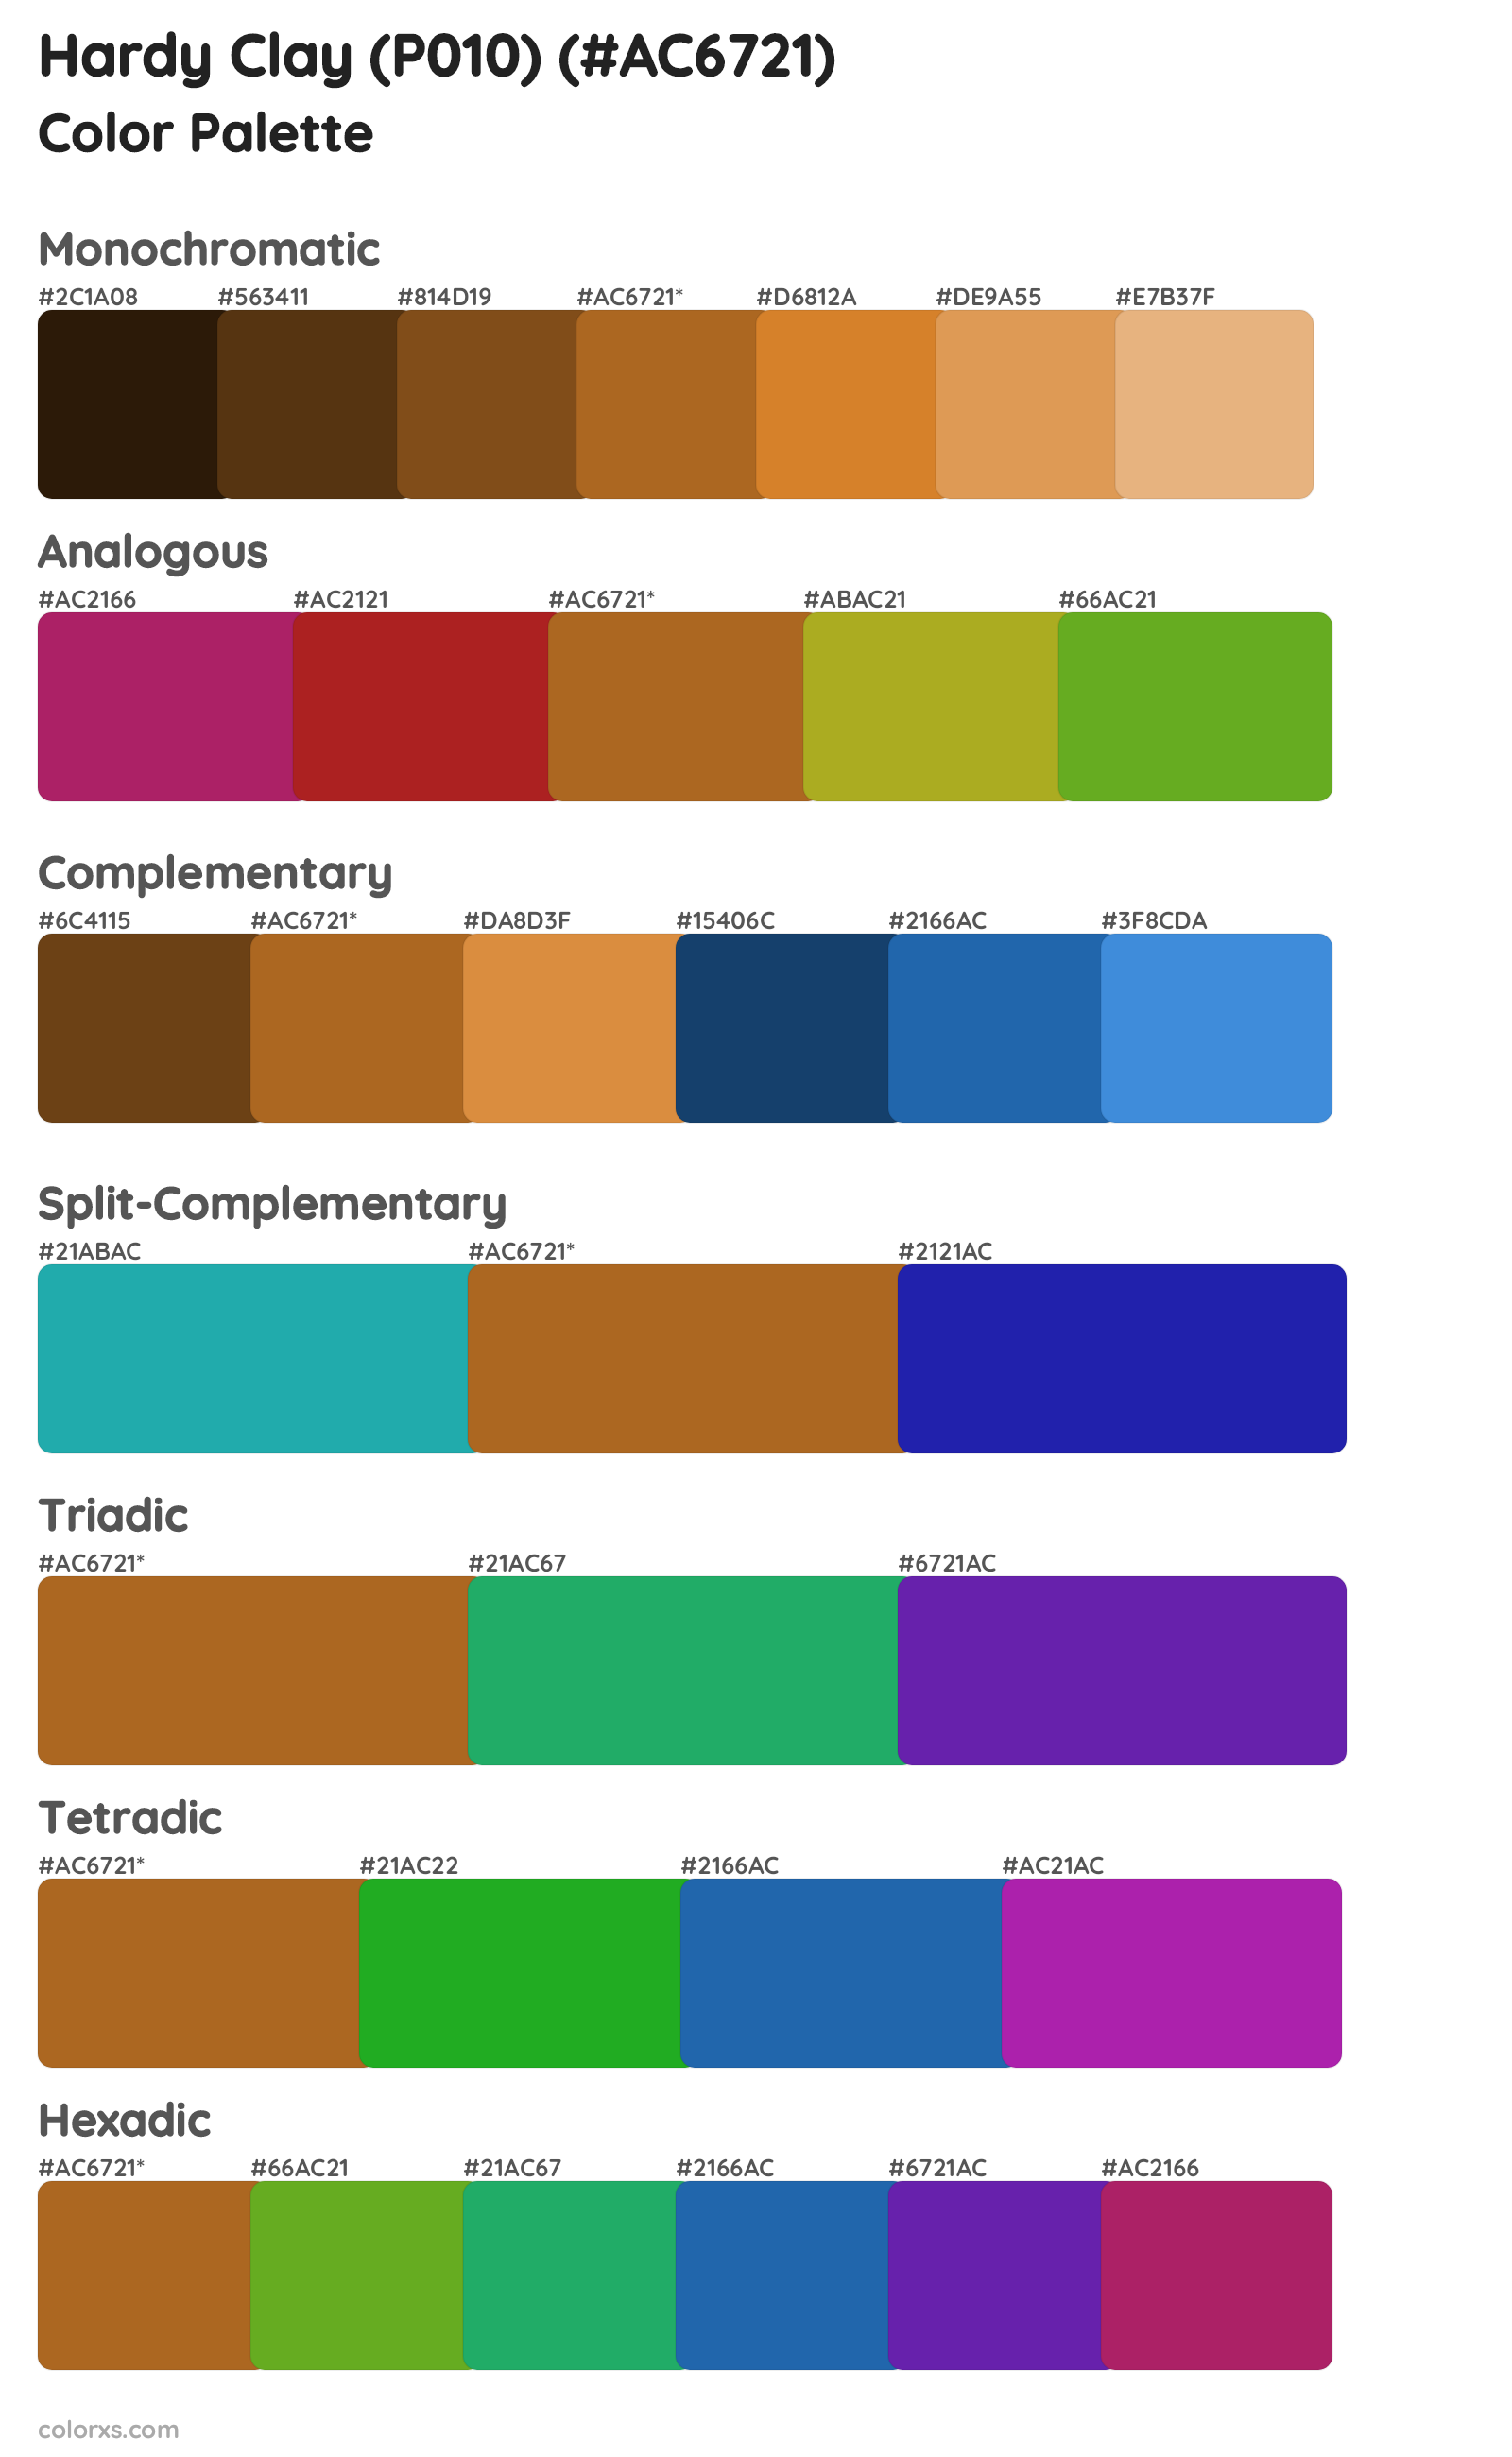 Hardy Clay (P010) Color Scheme Palettes